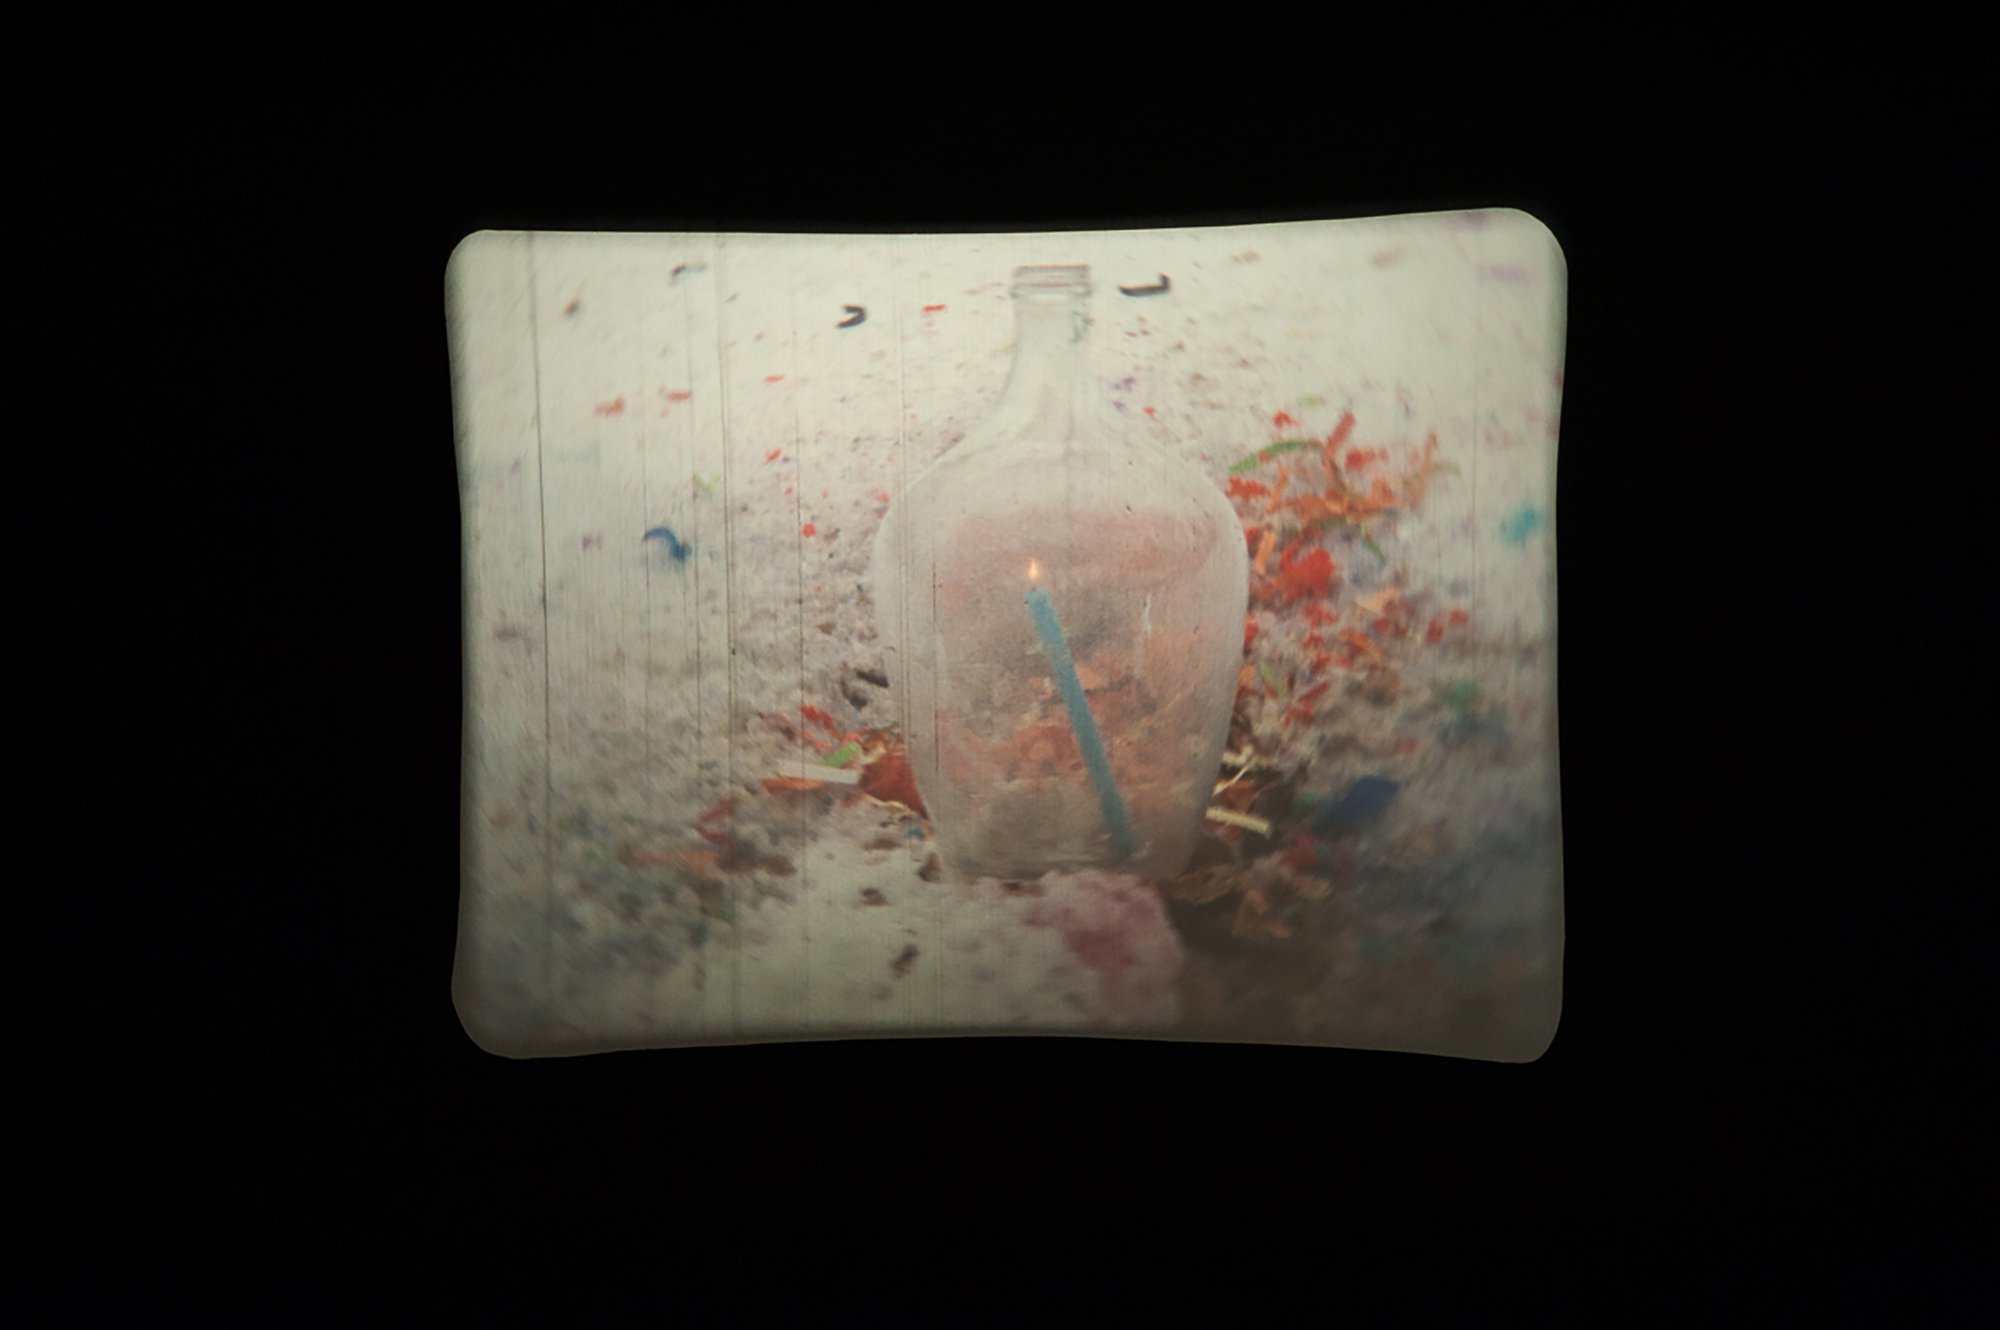 Tamara Henderson, Bottles Under The Influence, 16 mm film, color, optical sound, 7 min. 48 sec., 2012